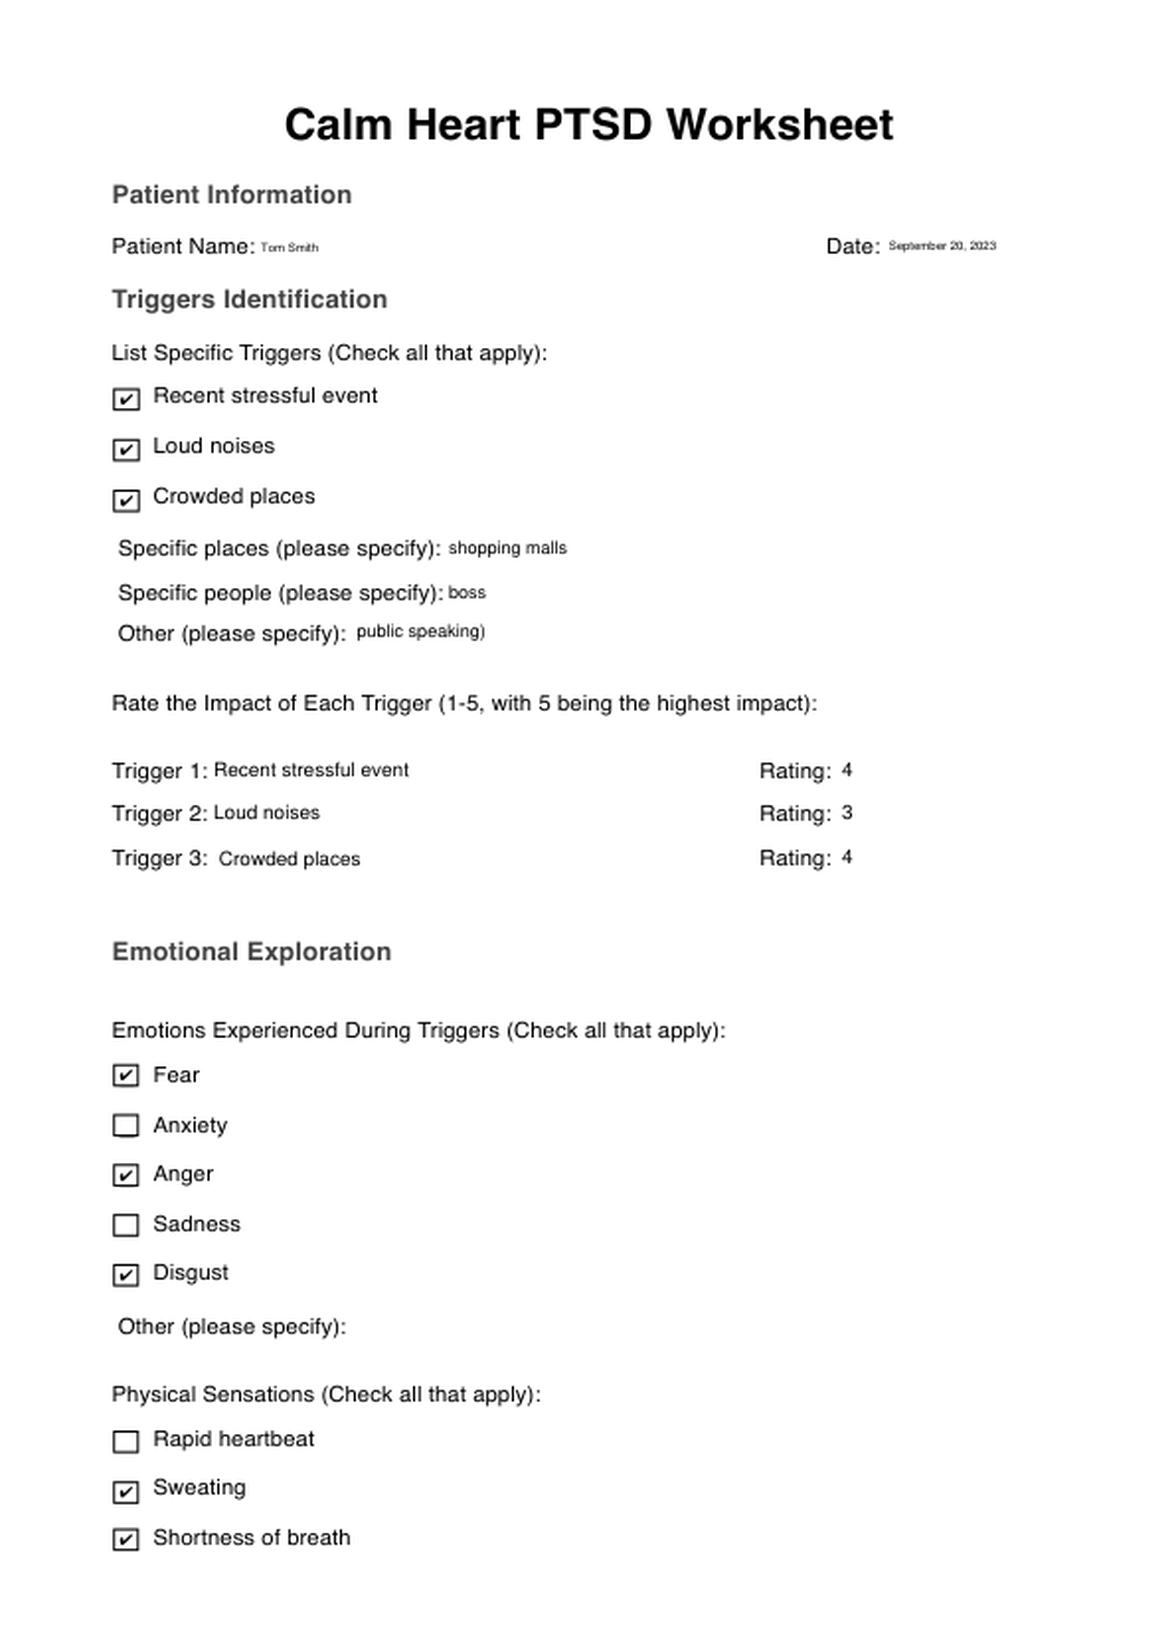 Calm Heart PTSD Worksheets PDF Example